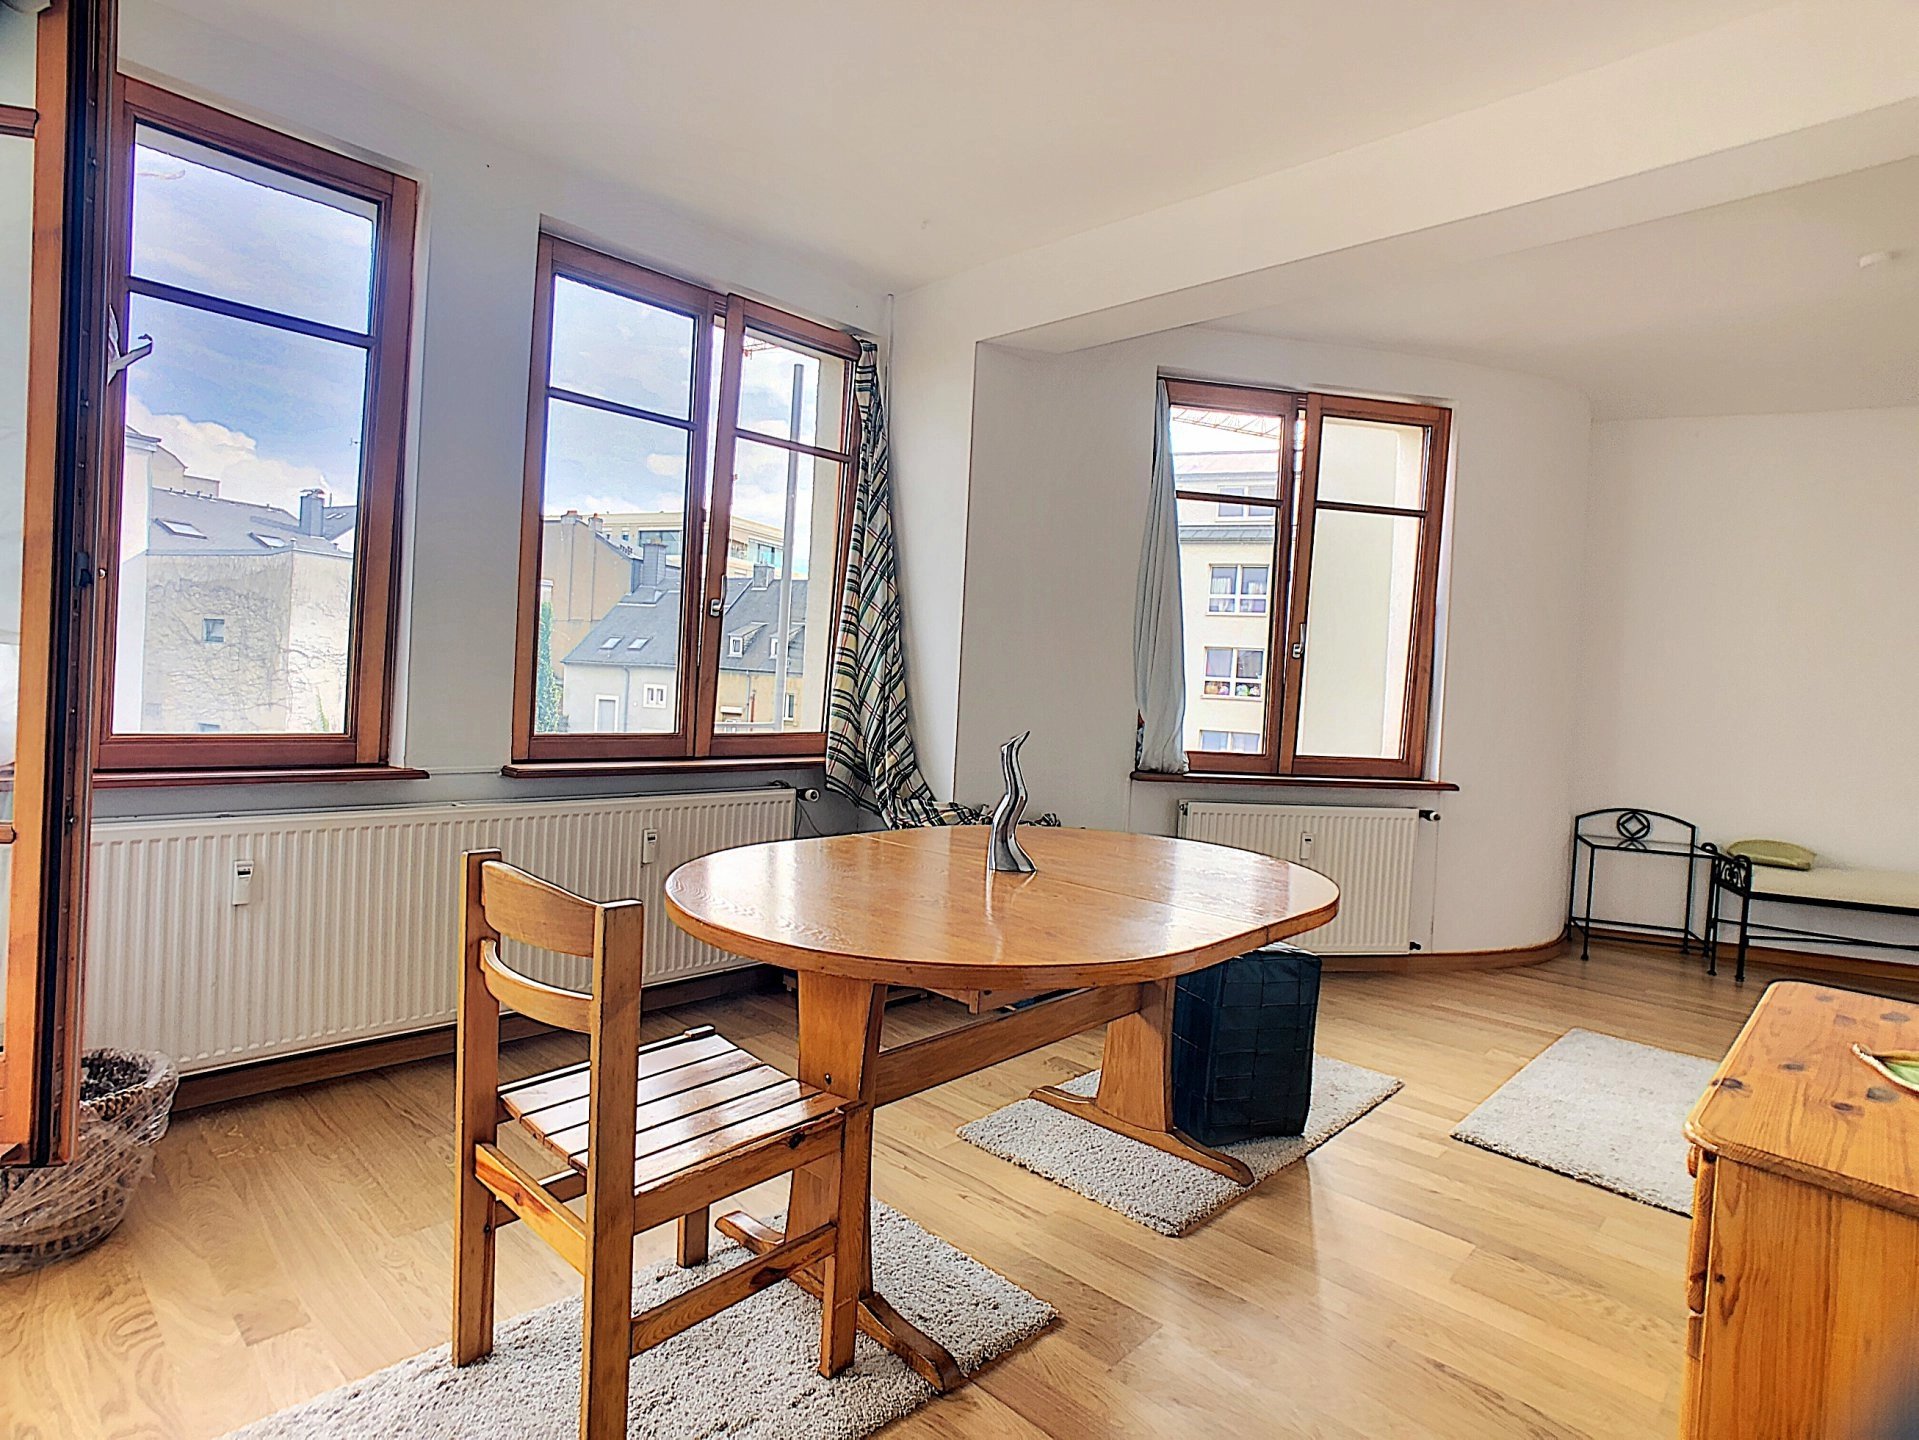 Appartement Duplex 3 chambres à vendre à Luxembourg Gare